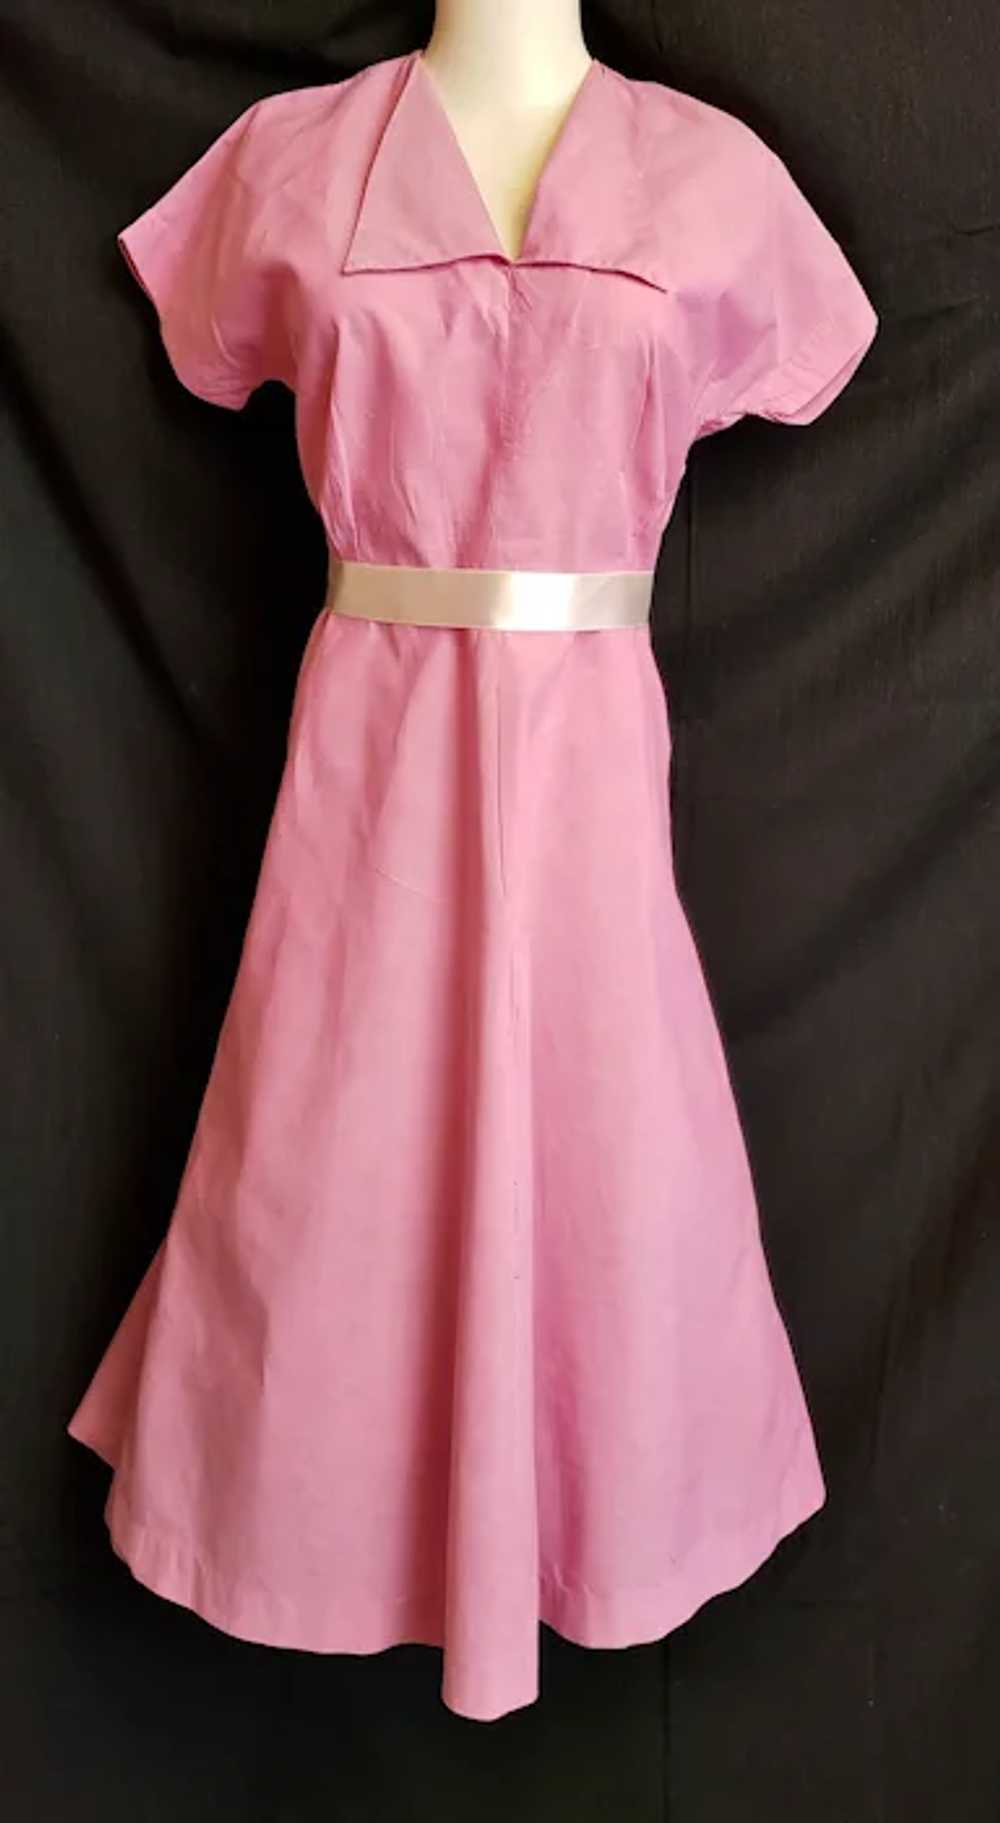 Luscious Raspberry Pink DAY DRESS - image 3